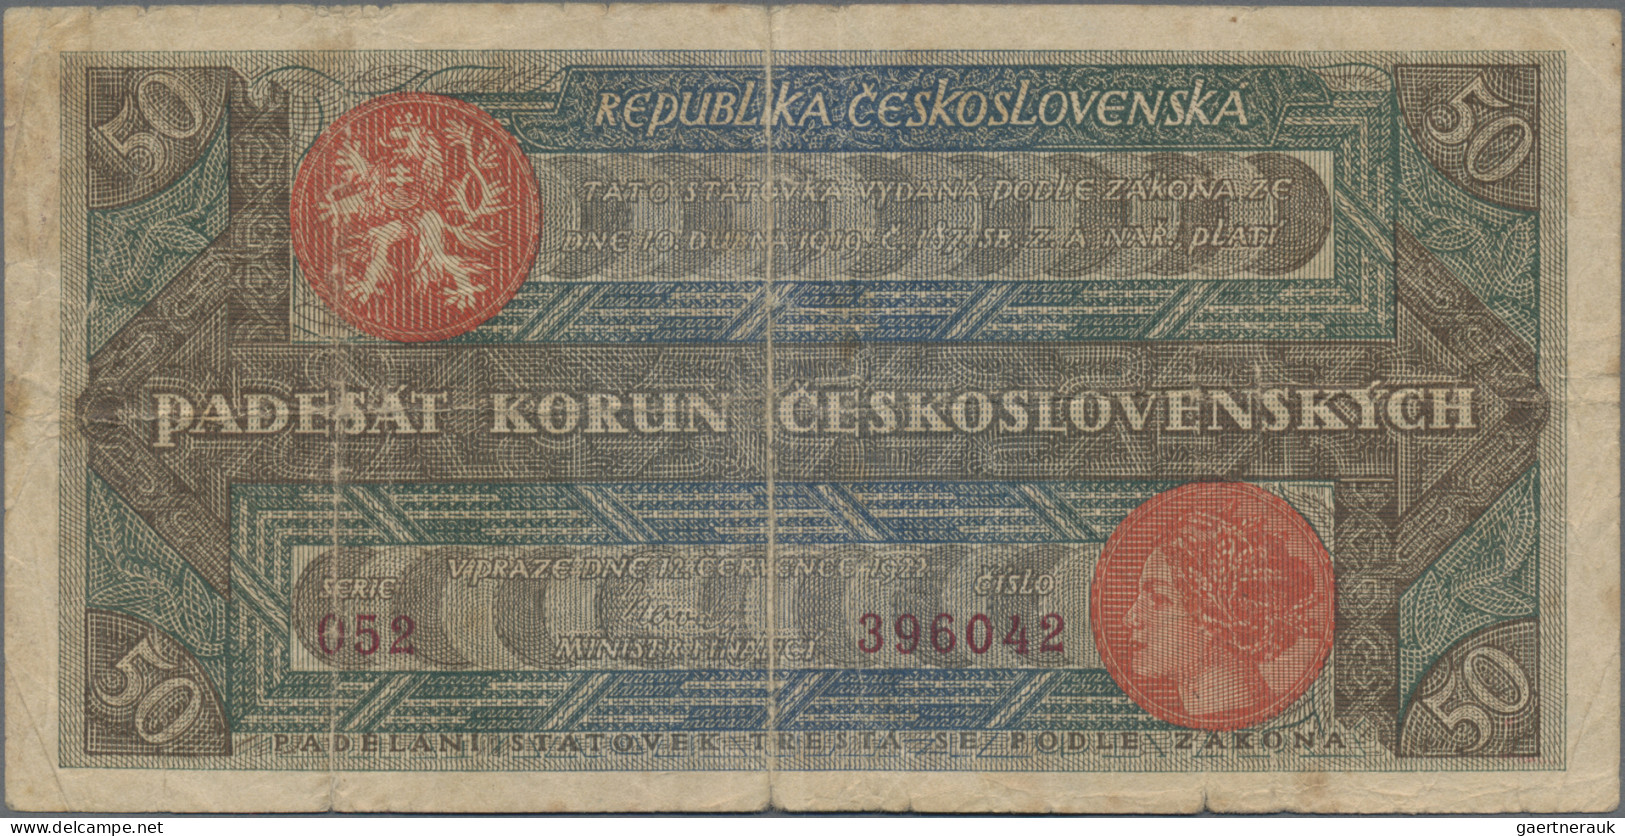 Czechoslovakia: Republika Československá 50 Korun 1922, P.16, Very Popular Note - Czechoslovakia